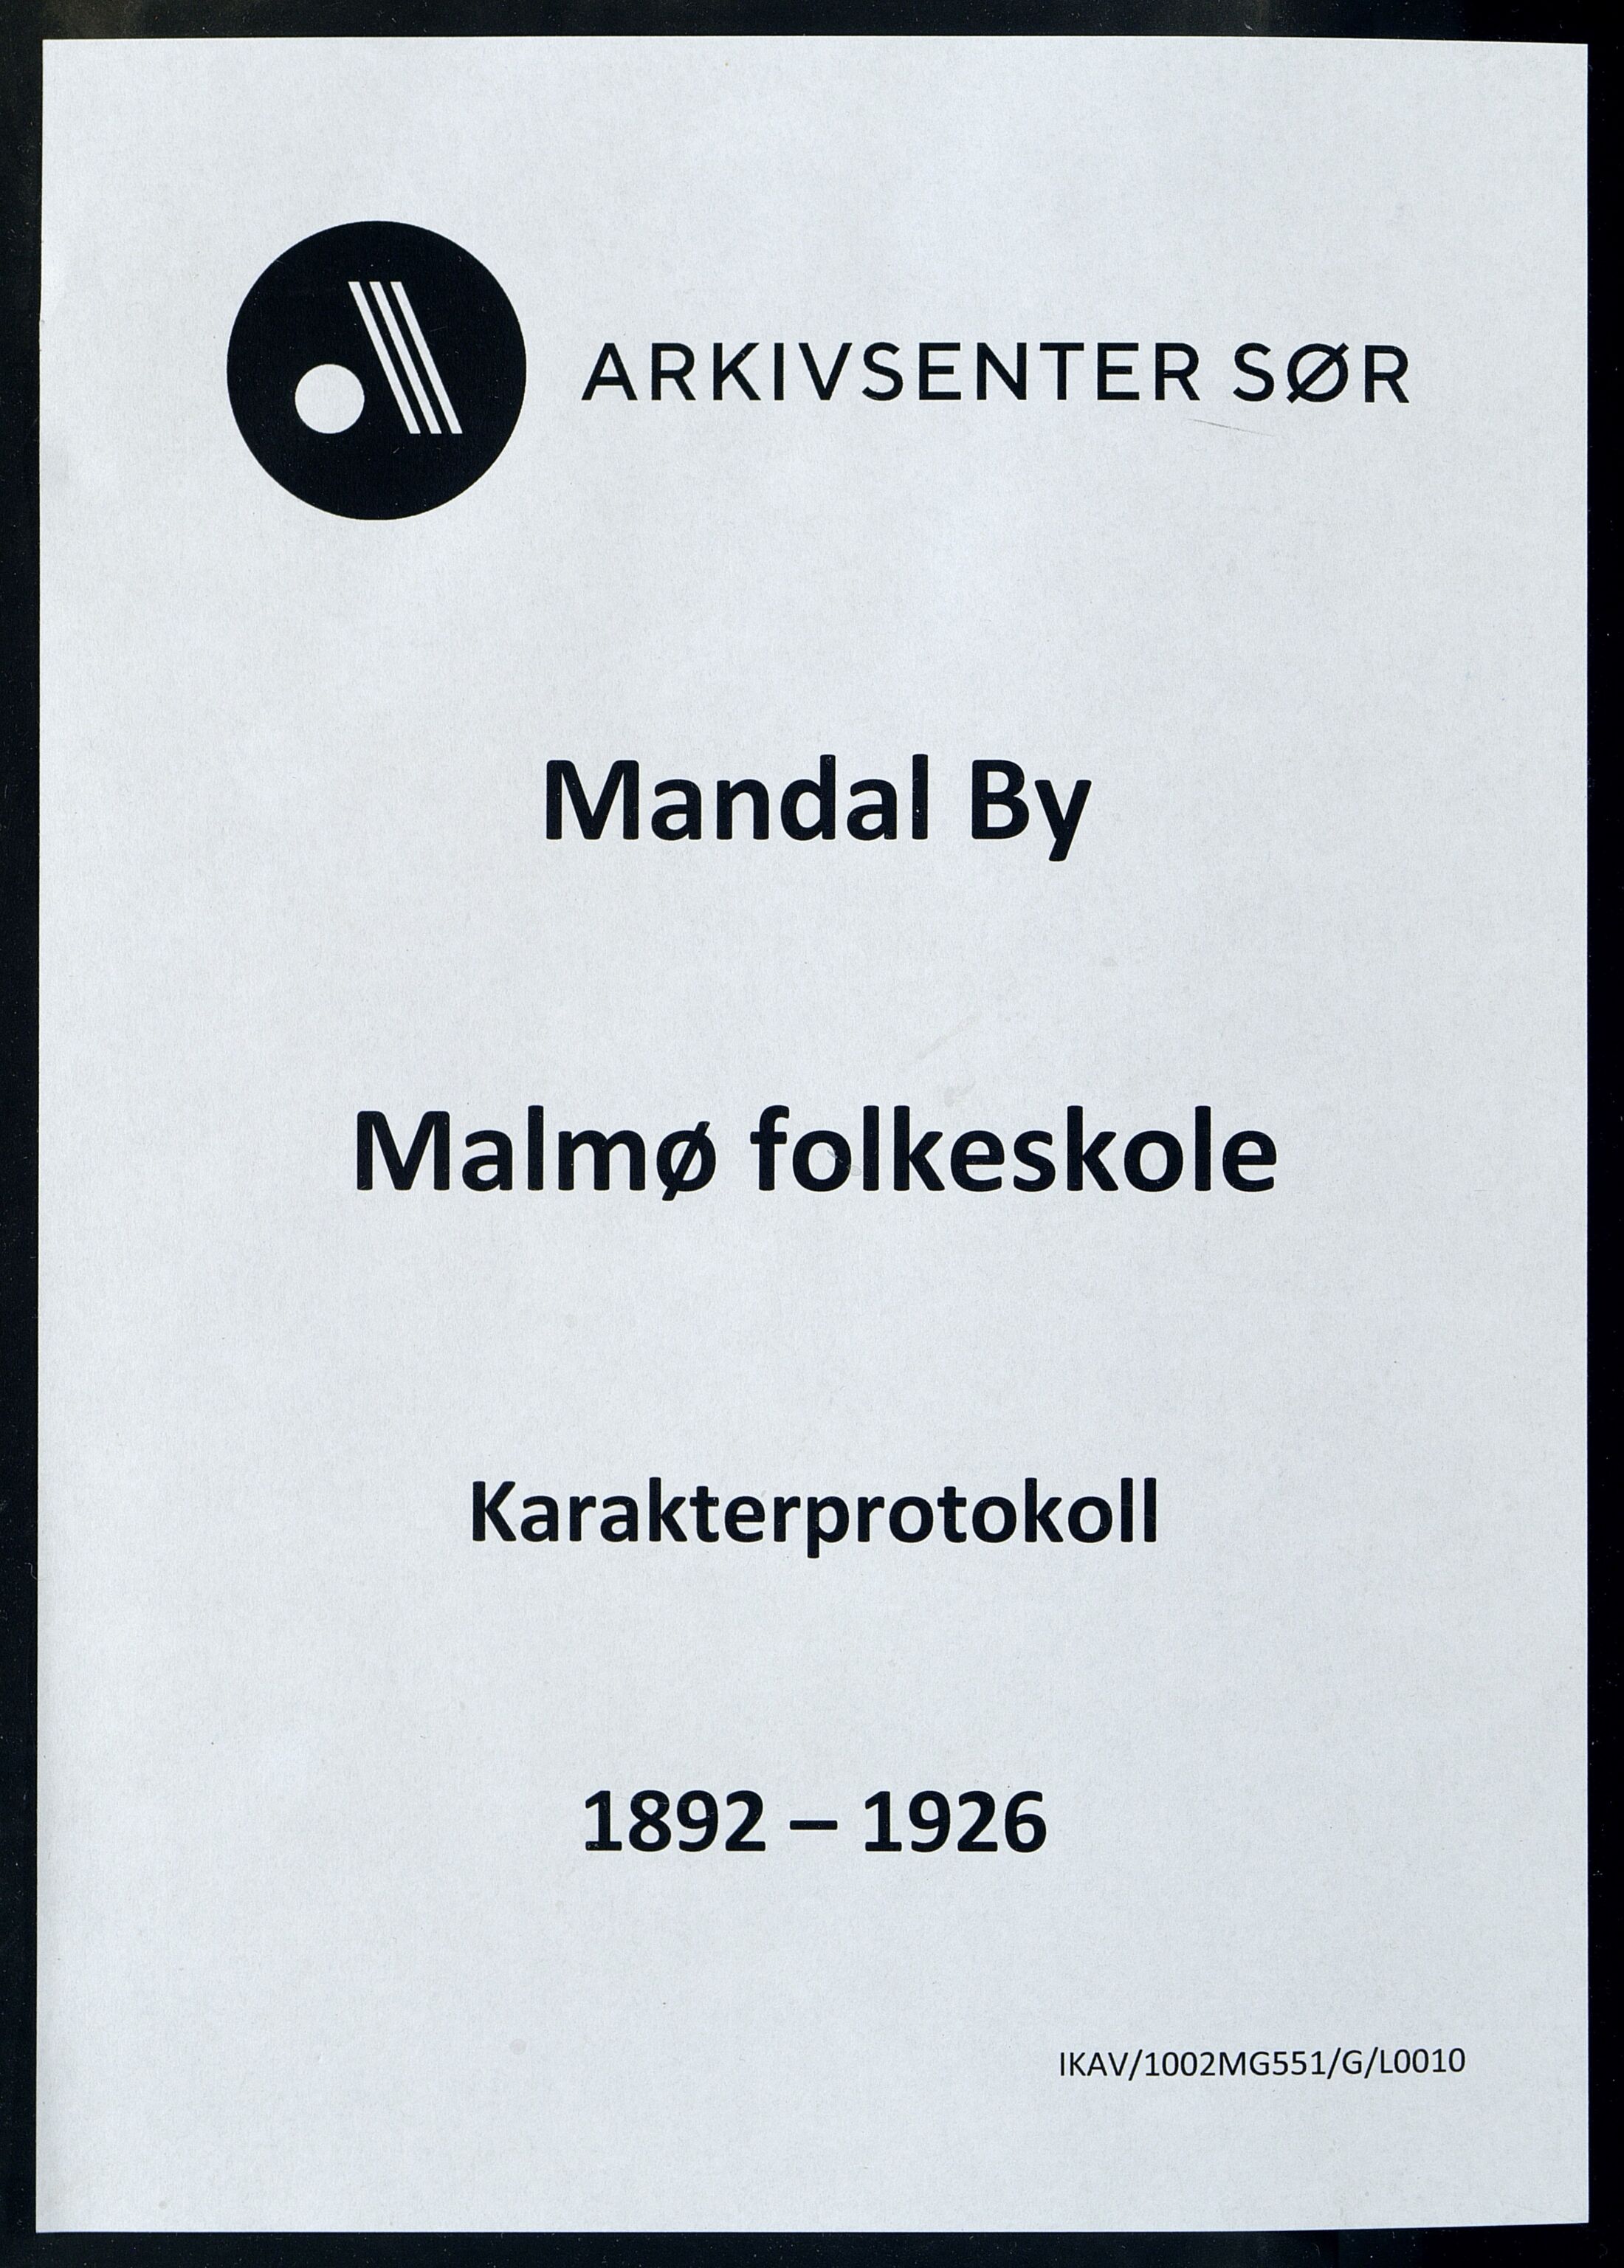 Mandal By - Mandal Allmueskole/Folkeskole/Skole, IKAV/1002MG551/G/L0010: Karakterprotokoll, 1892-1926